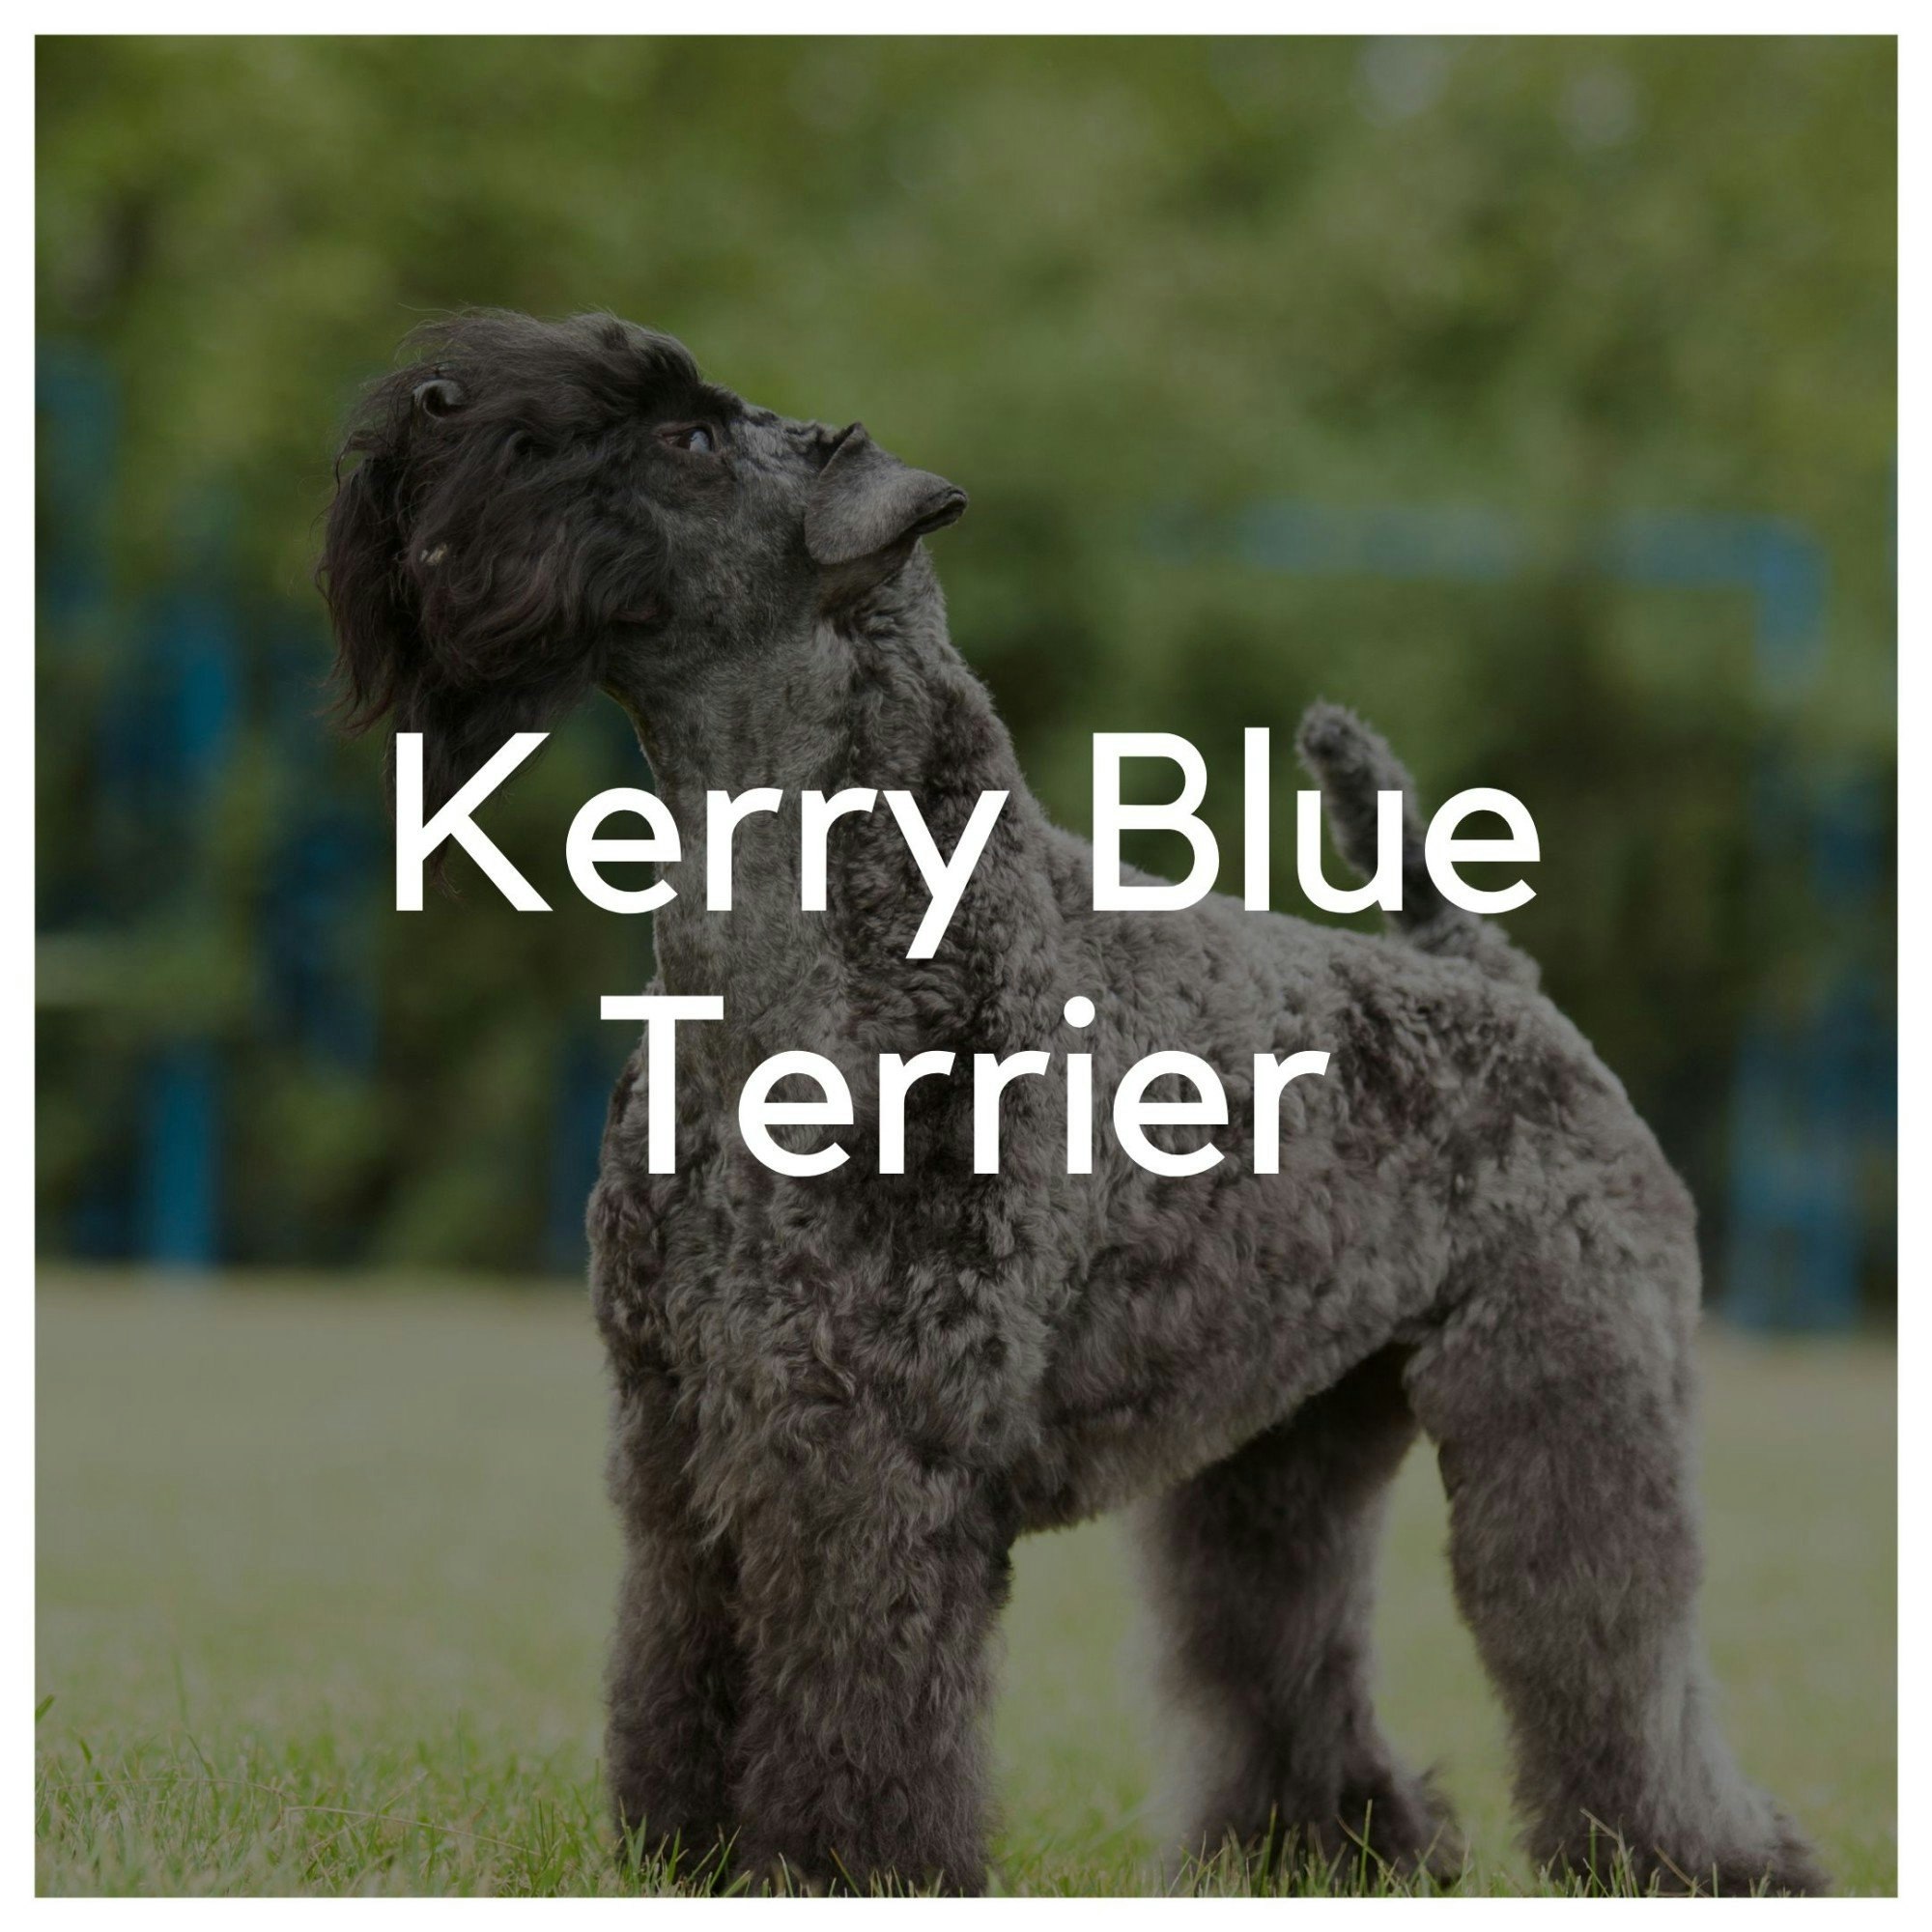 Kerry Blue Terrier - Liwa Design